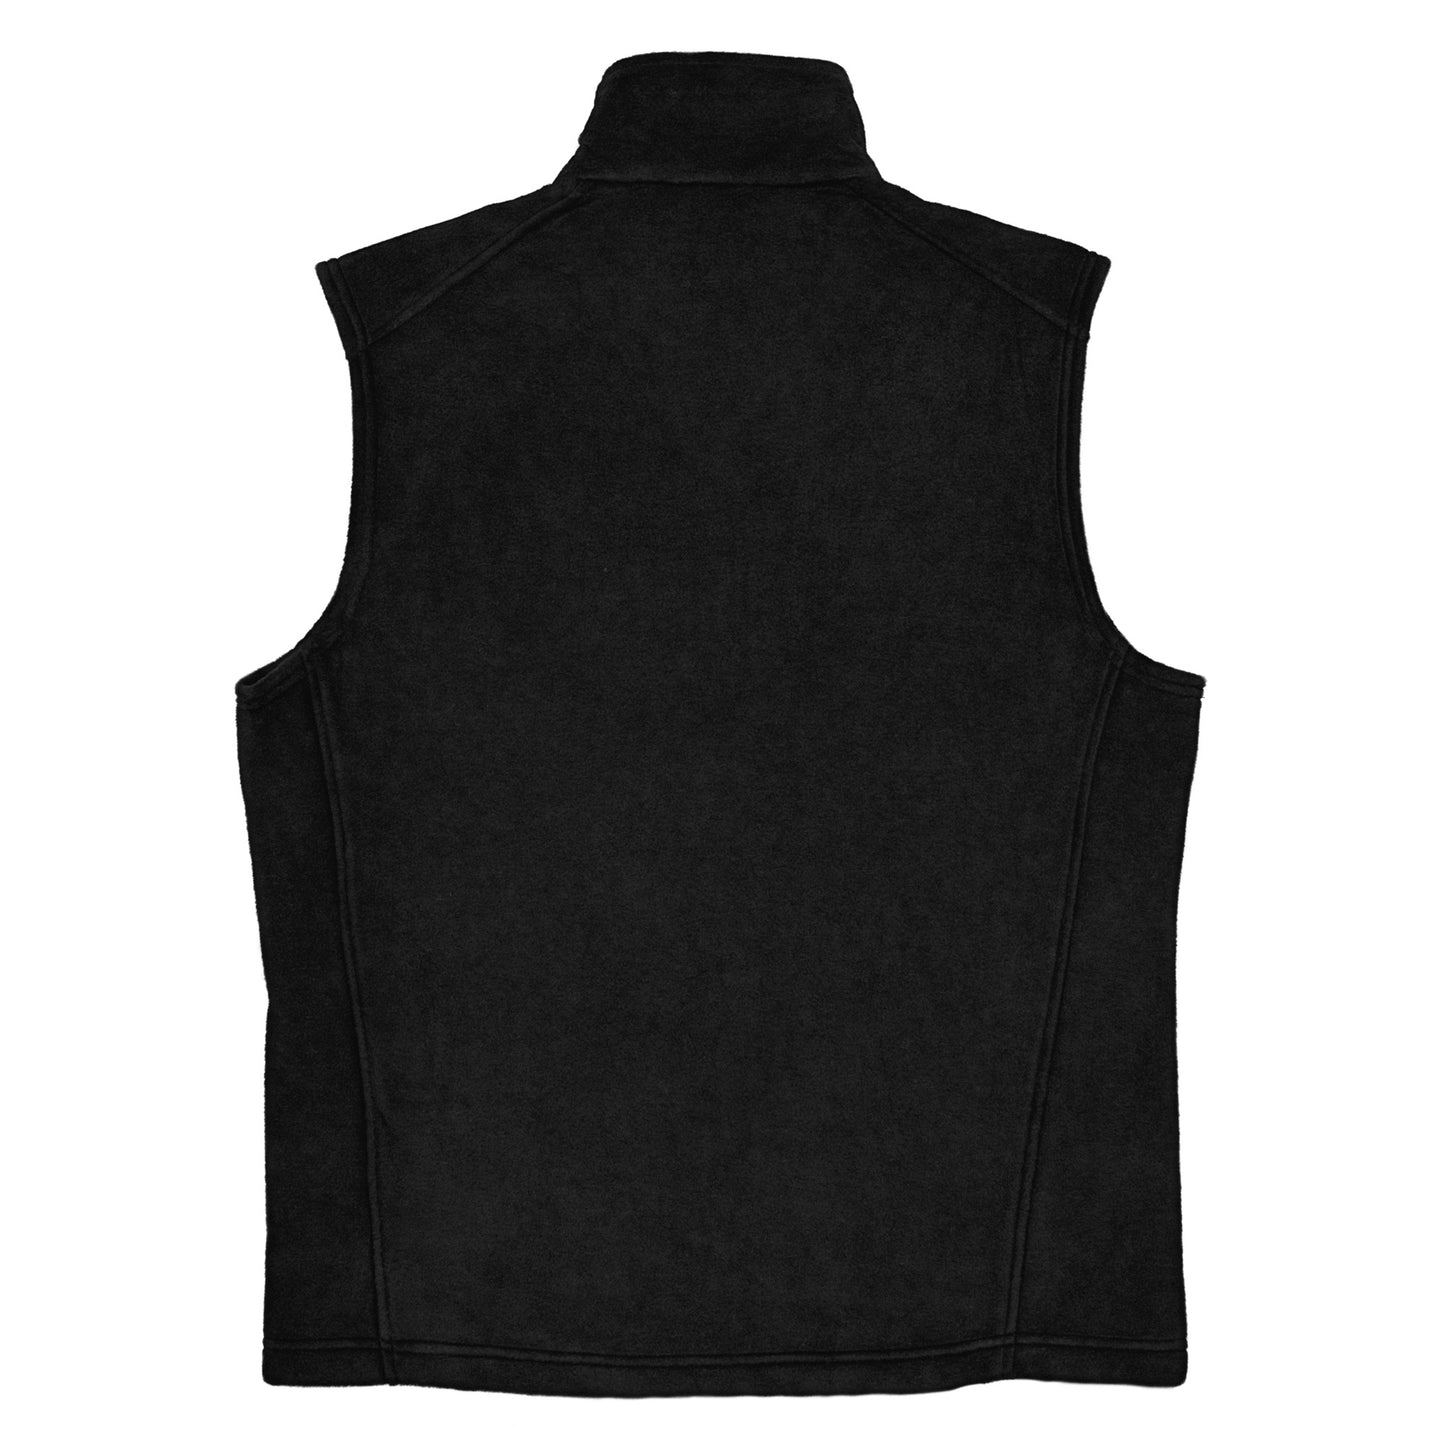 FINN Columbia fleece vest